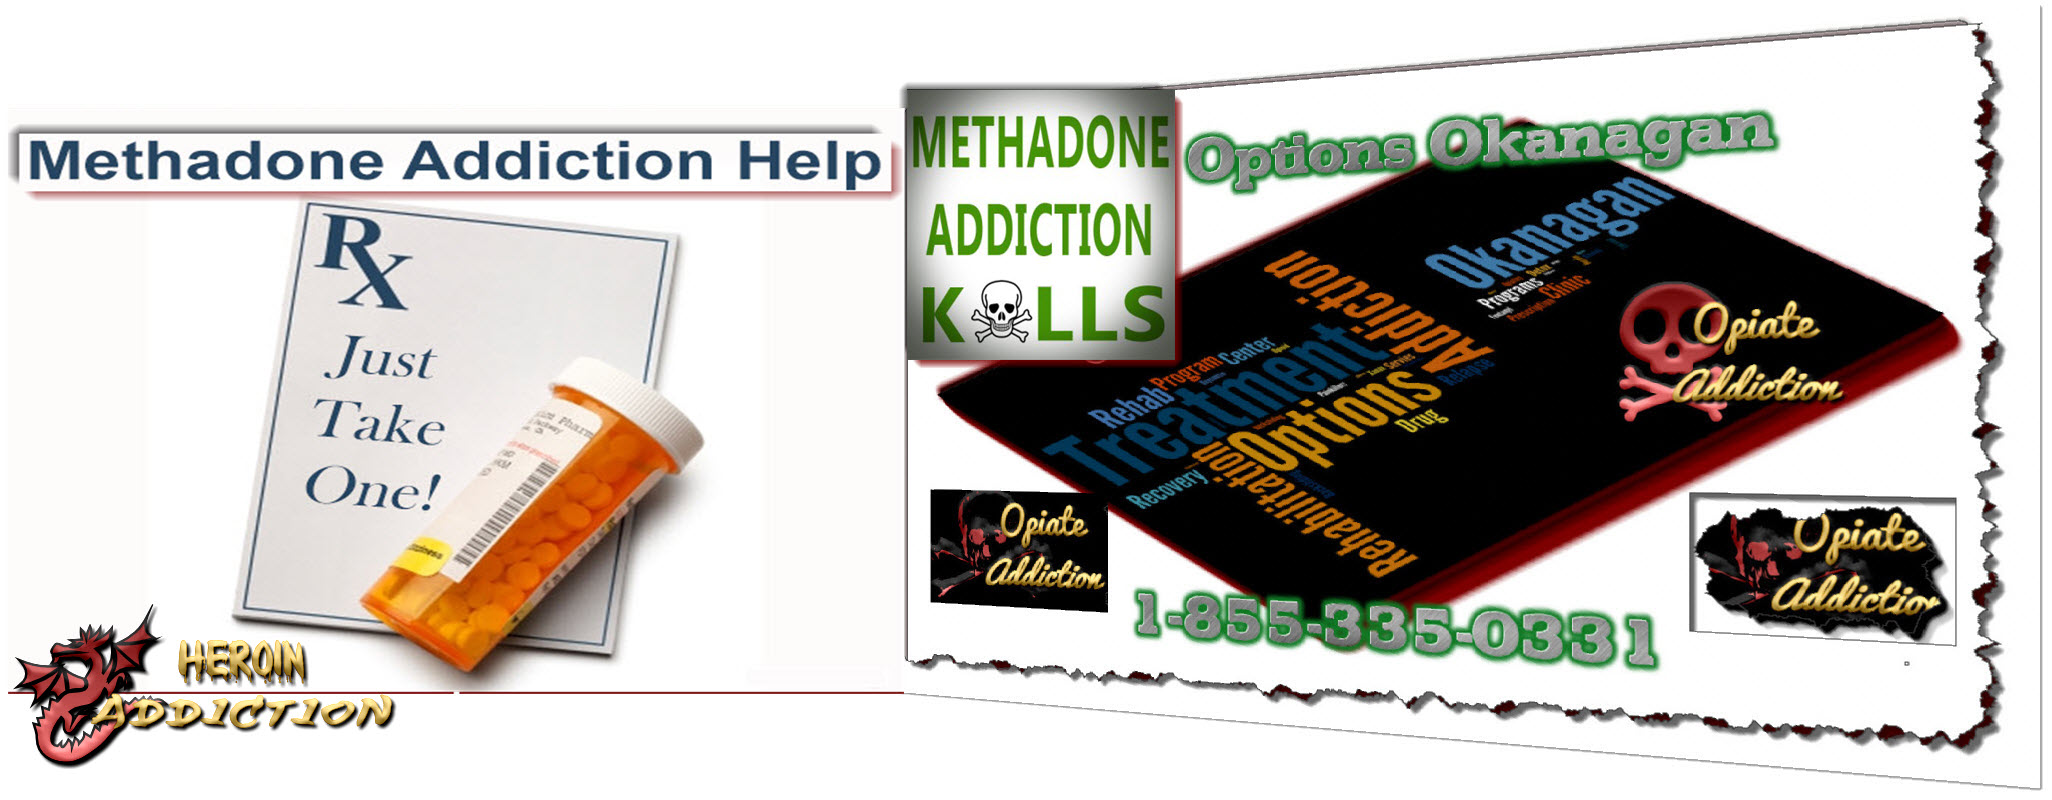 Men Living with Drug and Methadone addiction in Calgary, Alberta